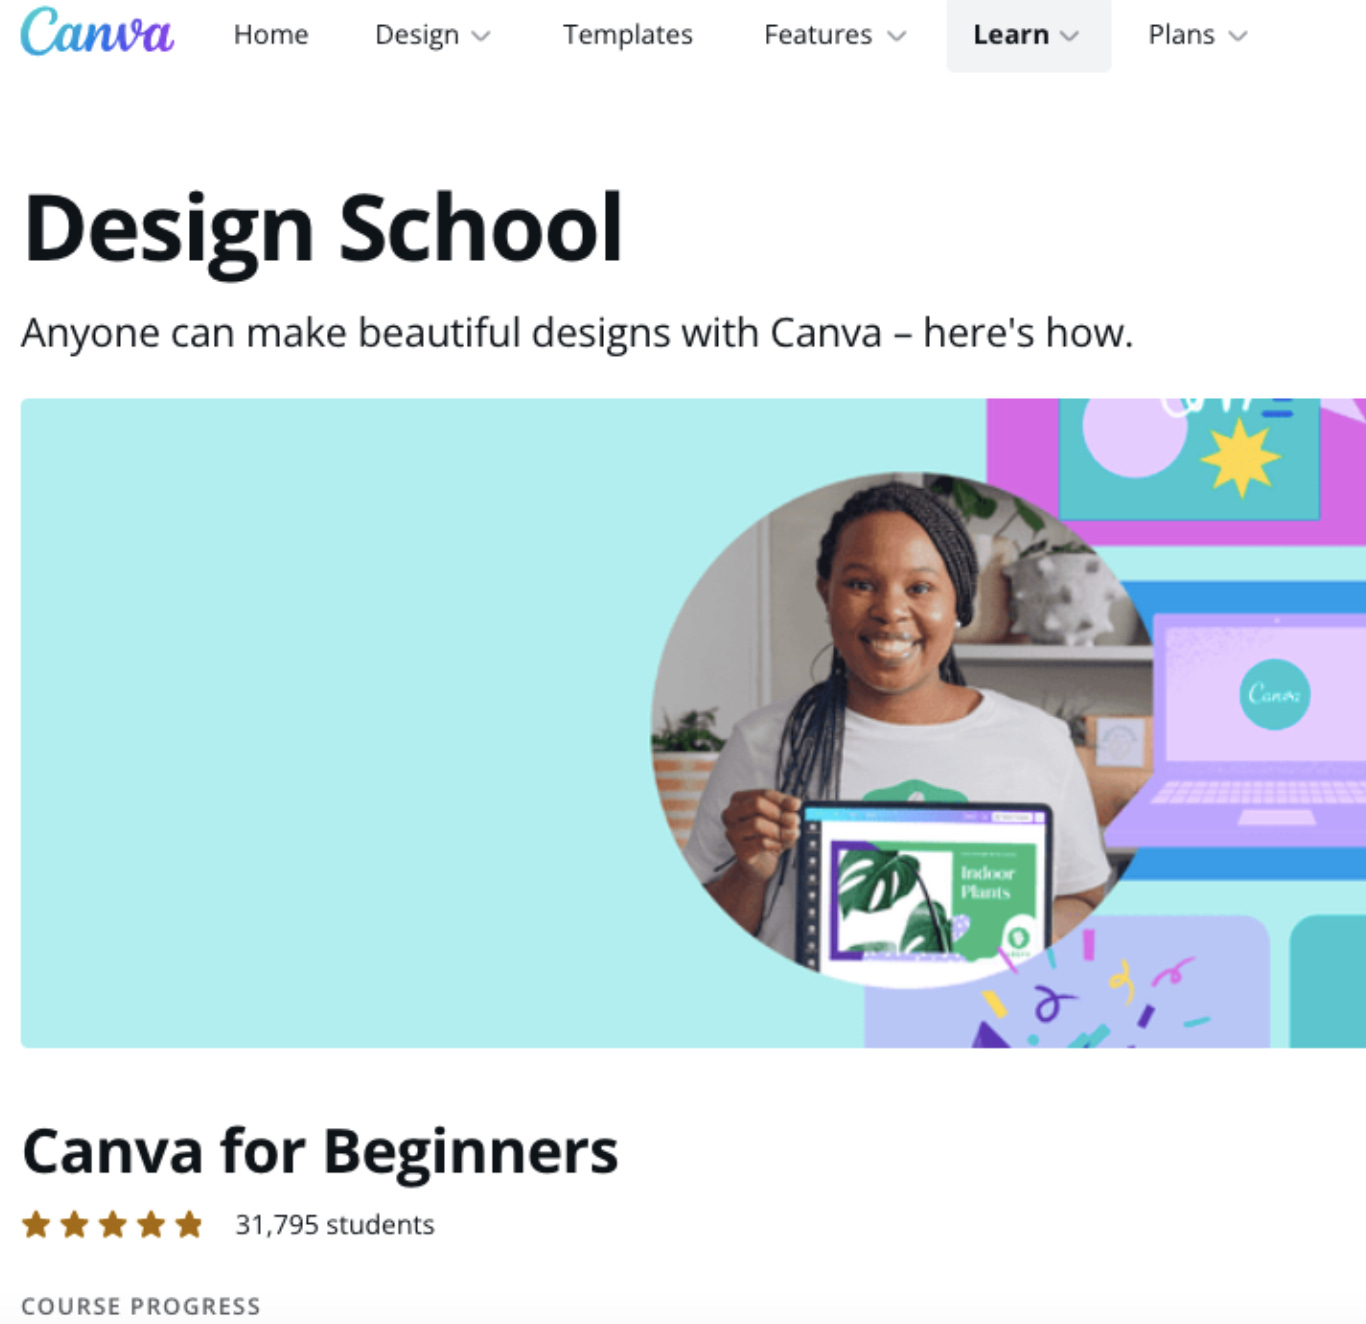 Canva for Beginners - Design School